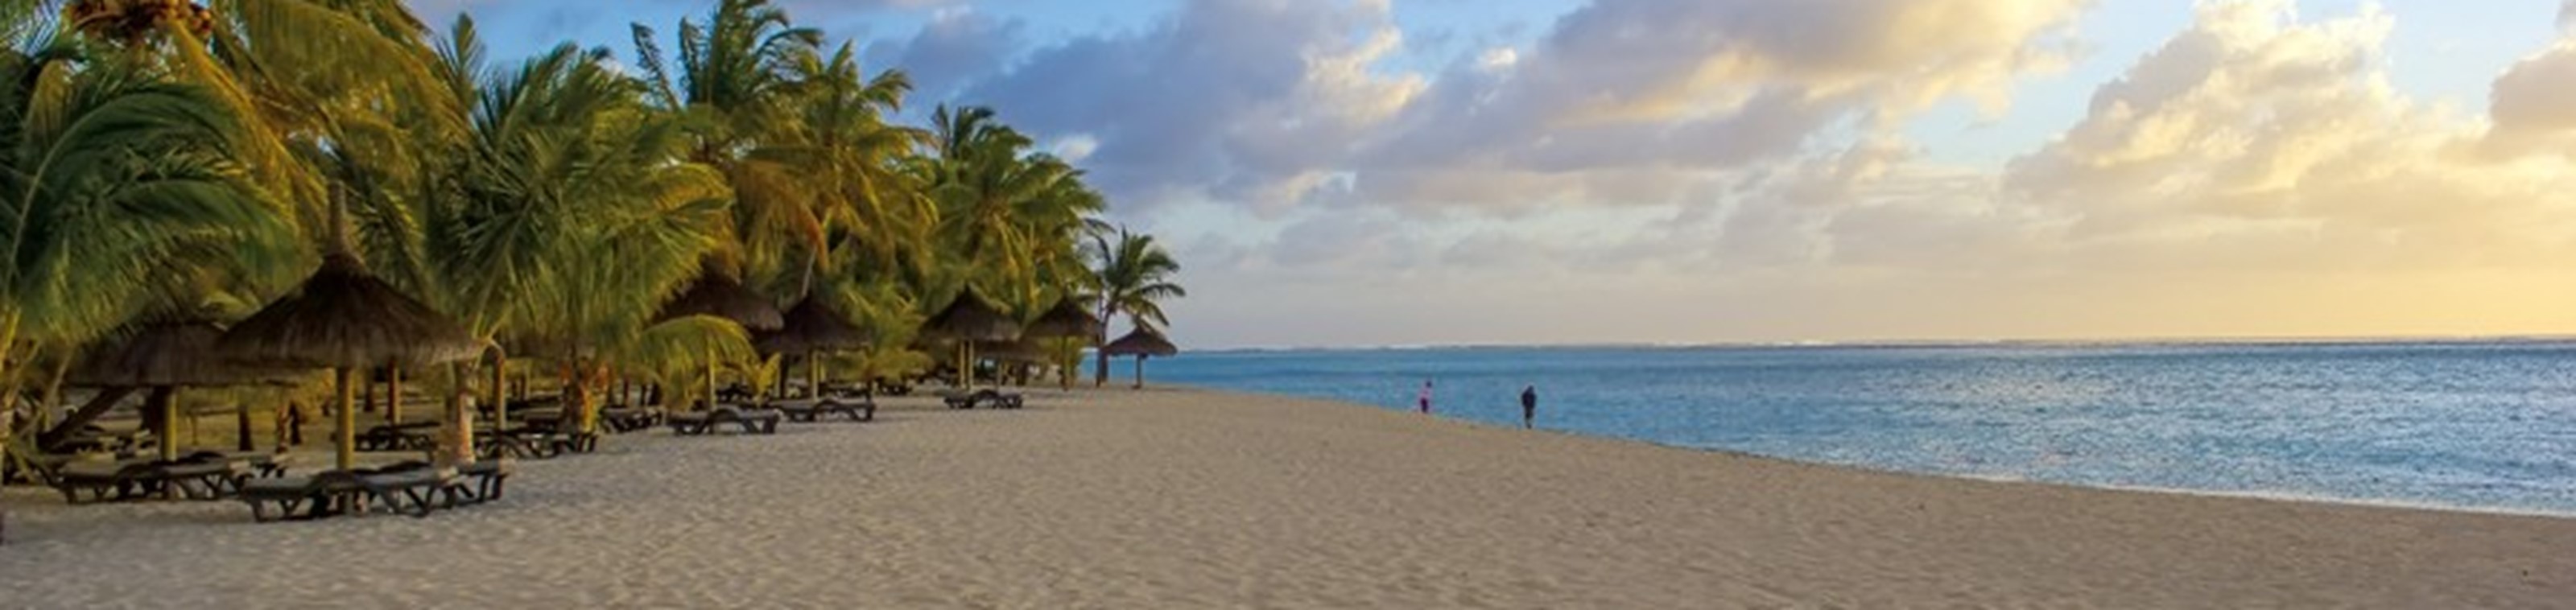 Dinarobin Beachcomber Golf Resort & Spa sur l’île Maurice